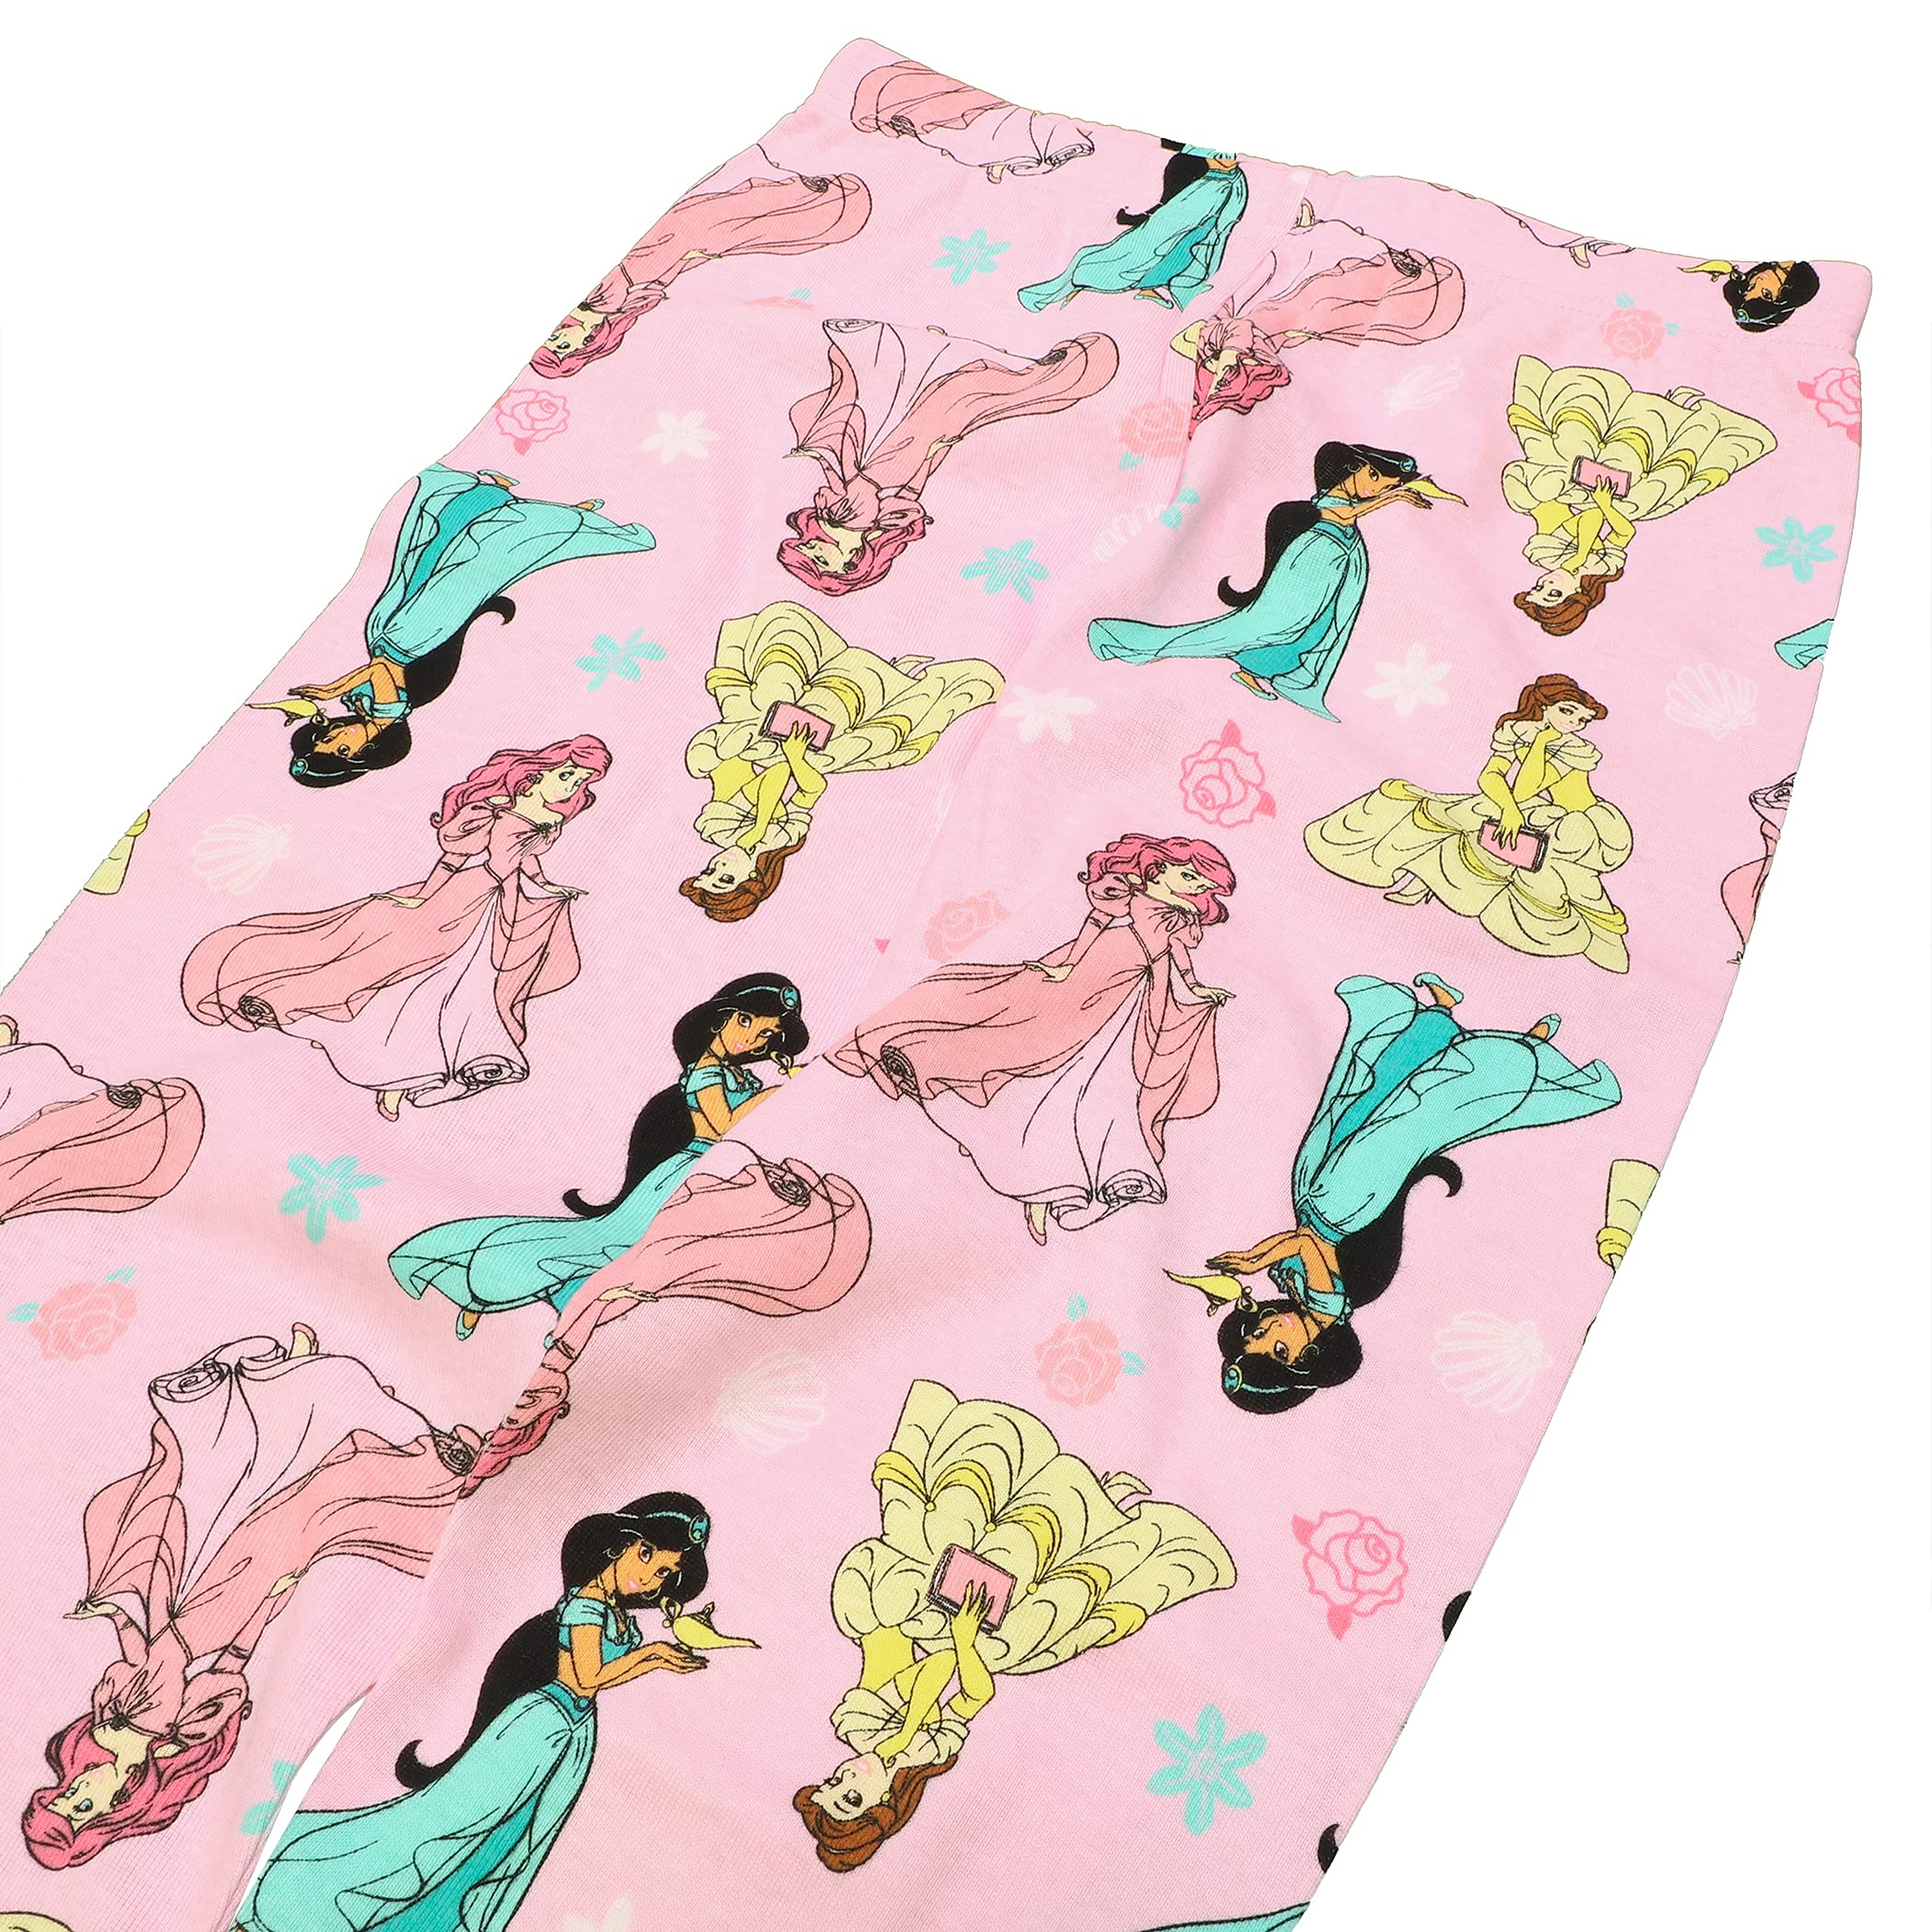 Disney Girls' Frozen | Princess | Minnie Mouse 6-Piece Snug-Fit Cotton Pajamas Set